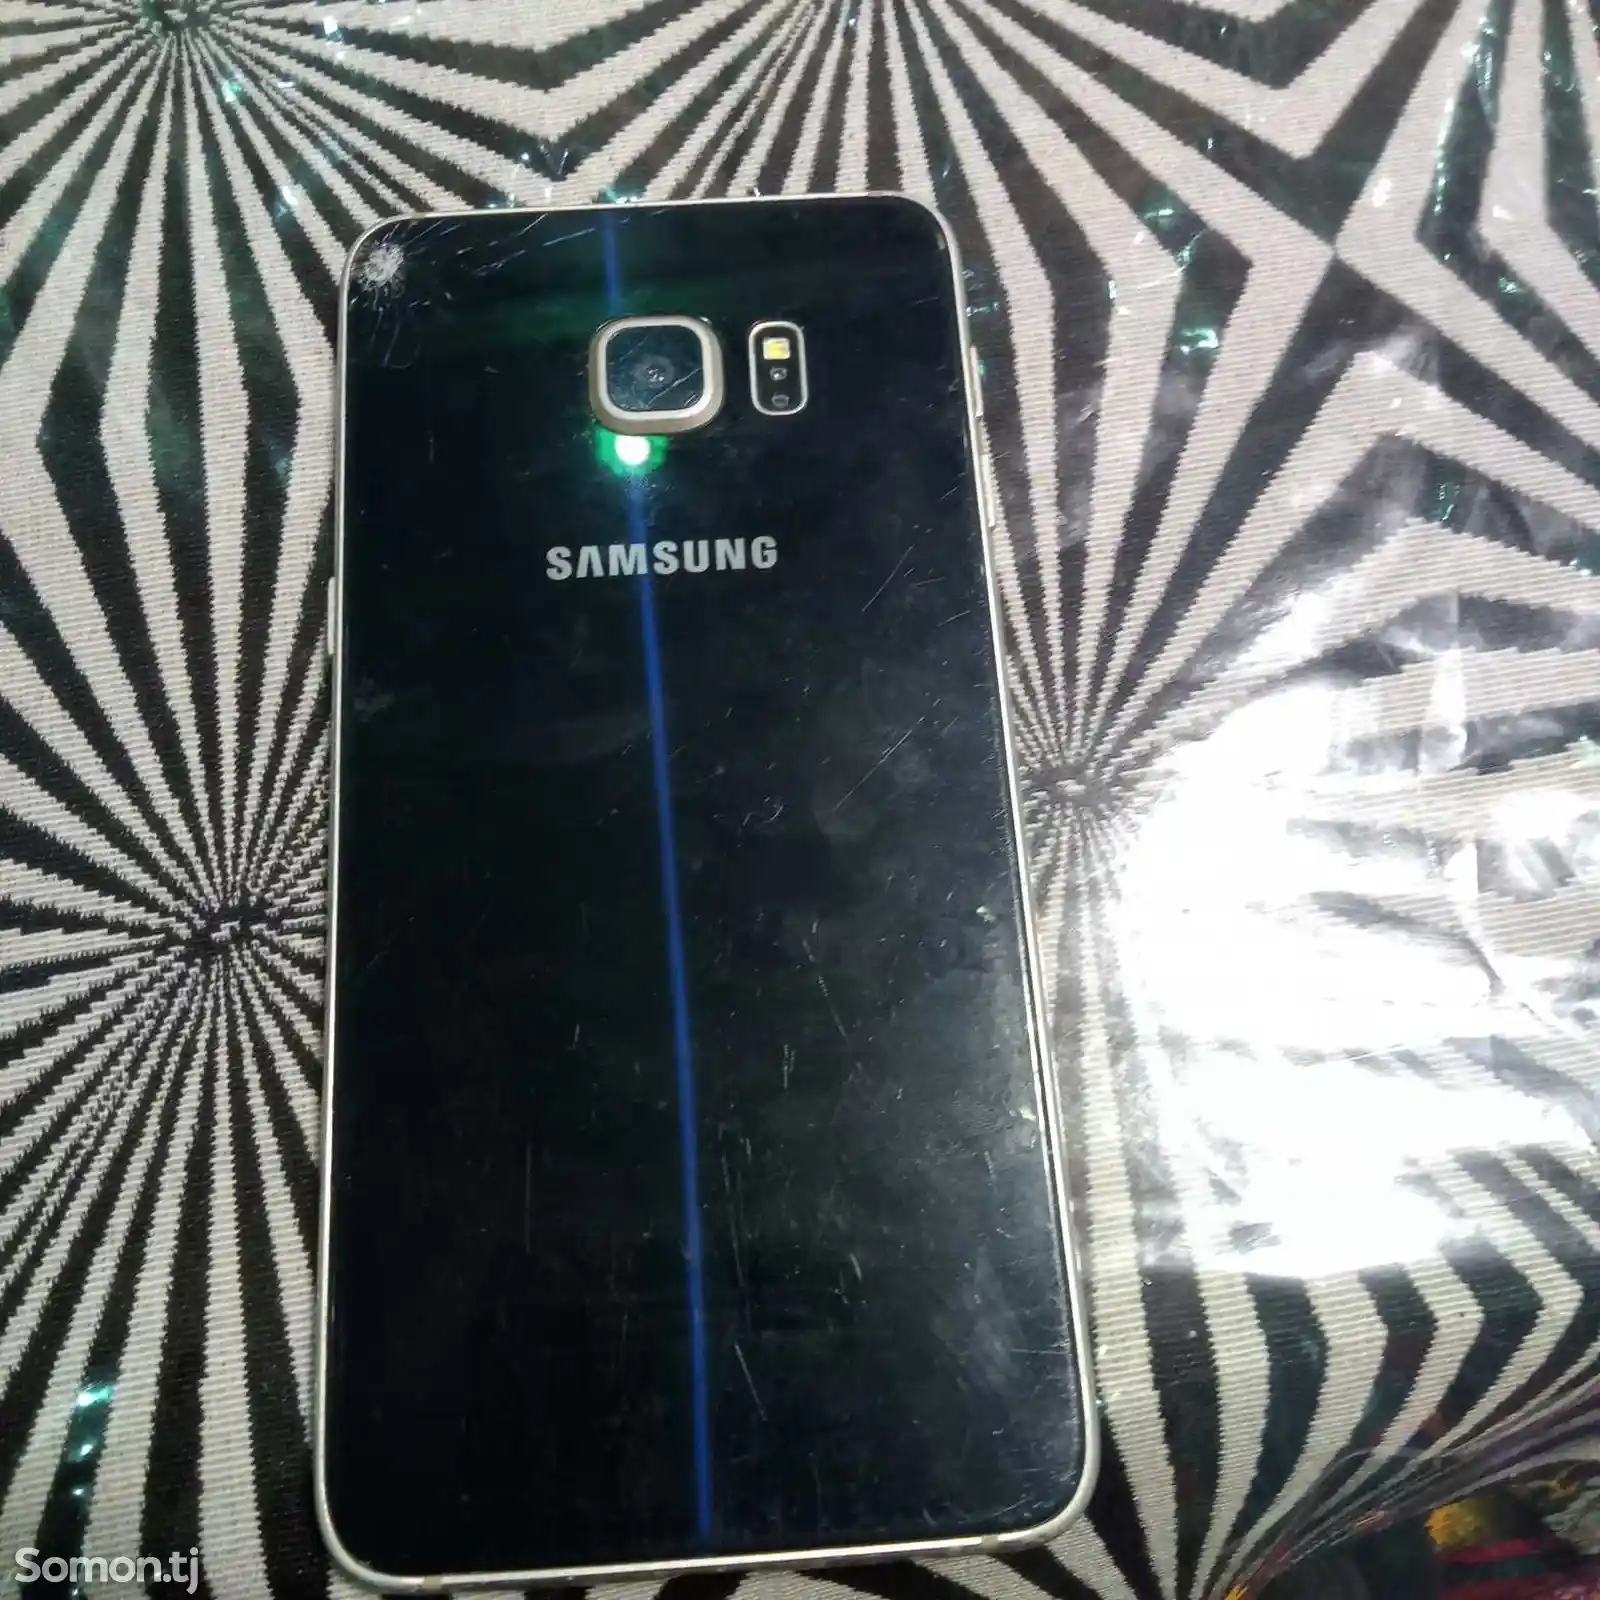 Samsung Galaxy S6 edge+-2